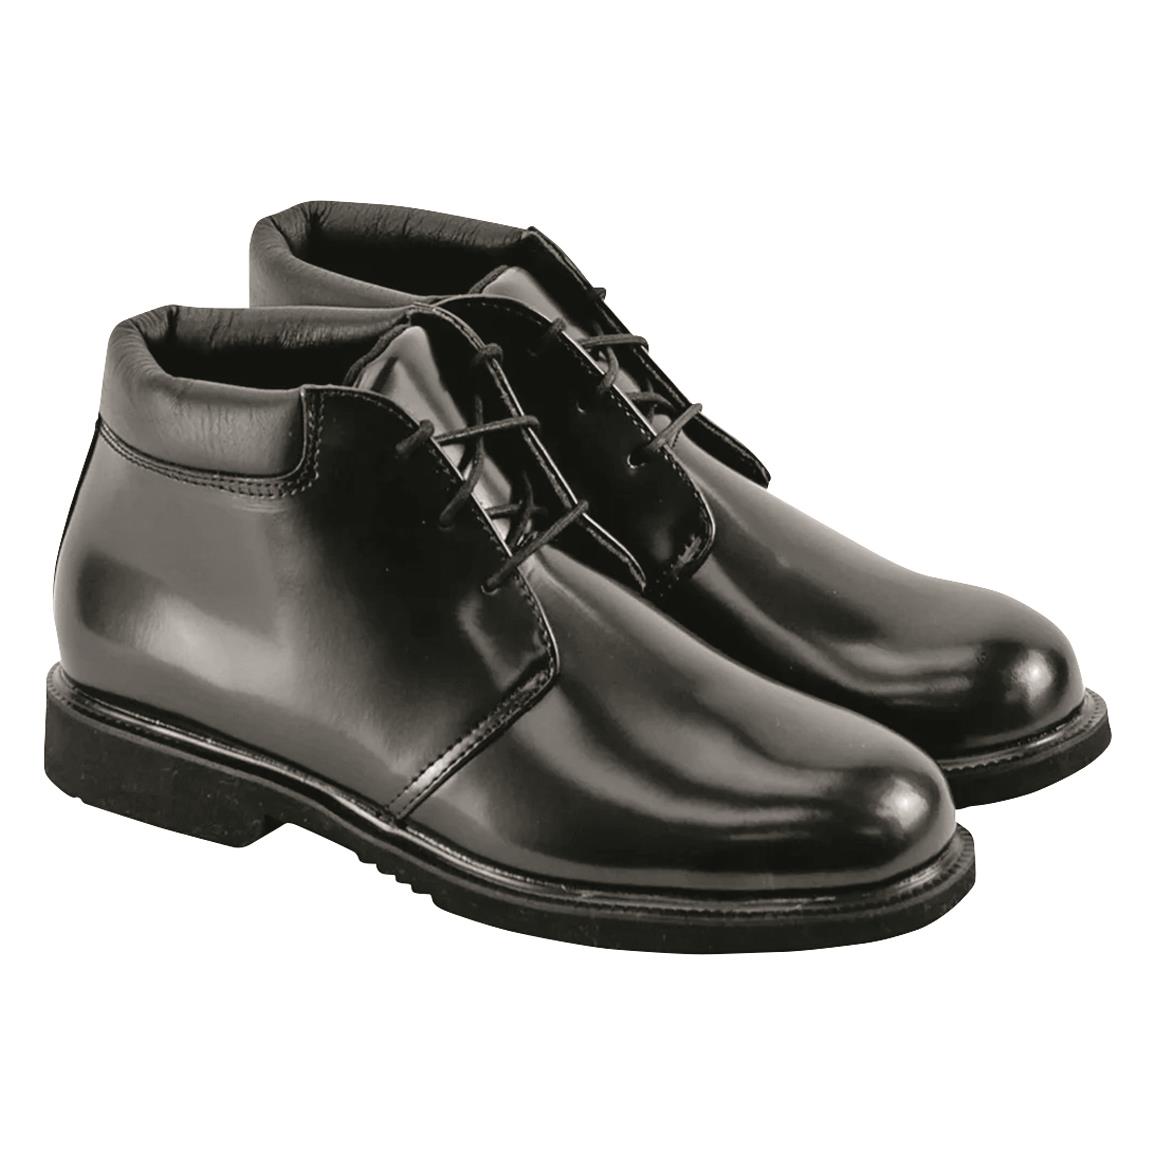 U.S. Military Surplus Thorogood Classic Chukka Boots, New, Black